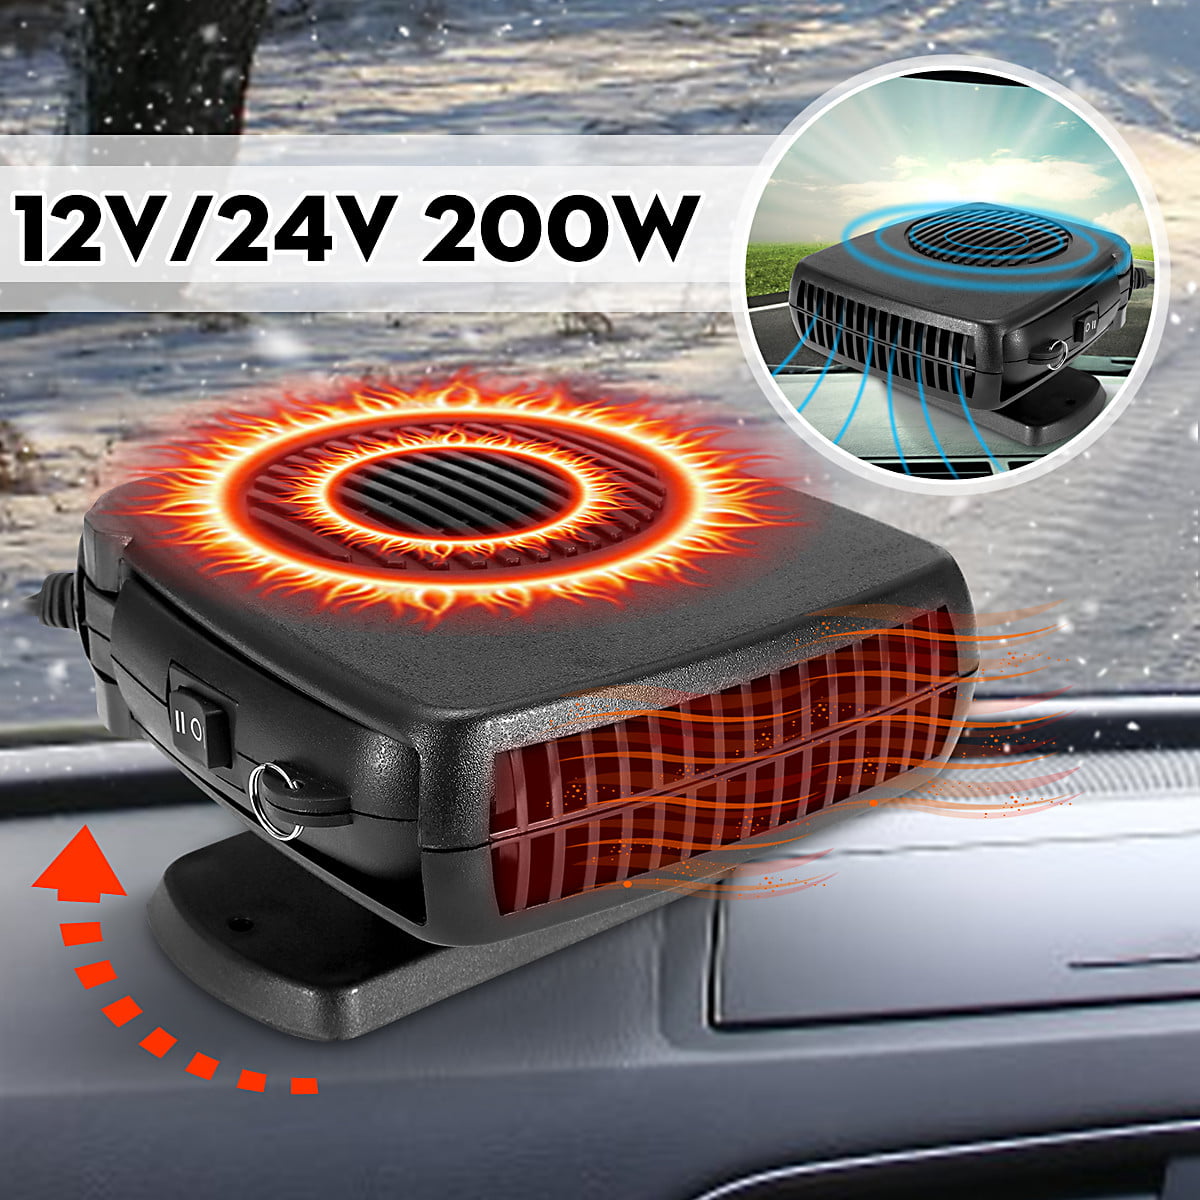 2x 12V 200W Portable Car Heating Heater Cooling Fan Defroster Demister Dryer NEW